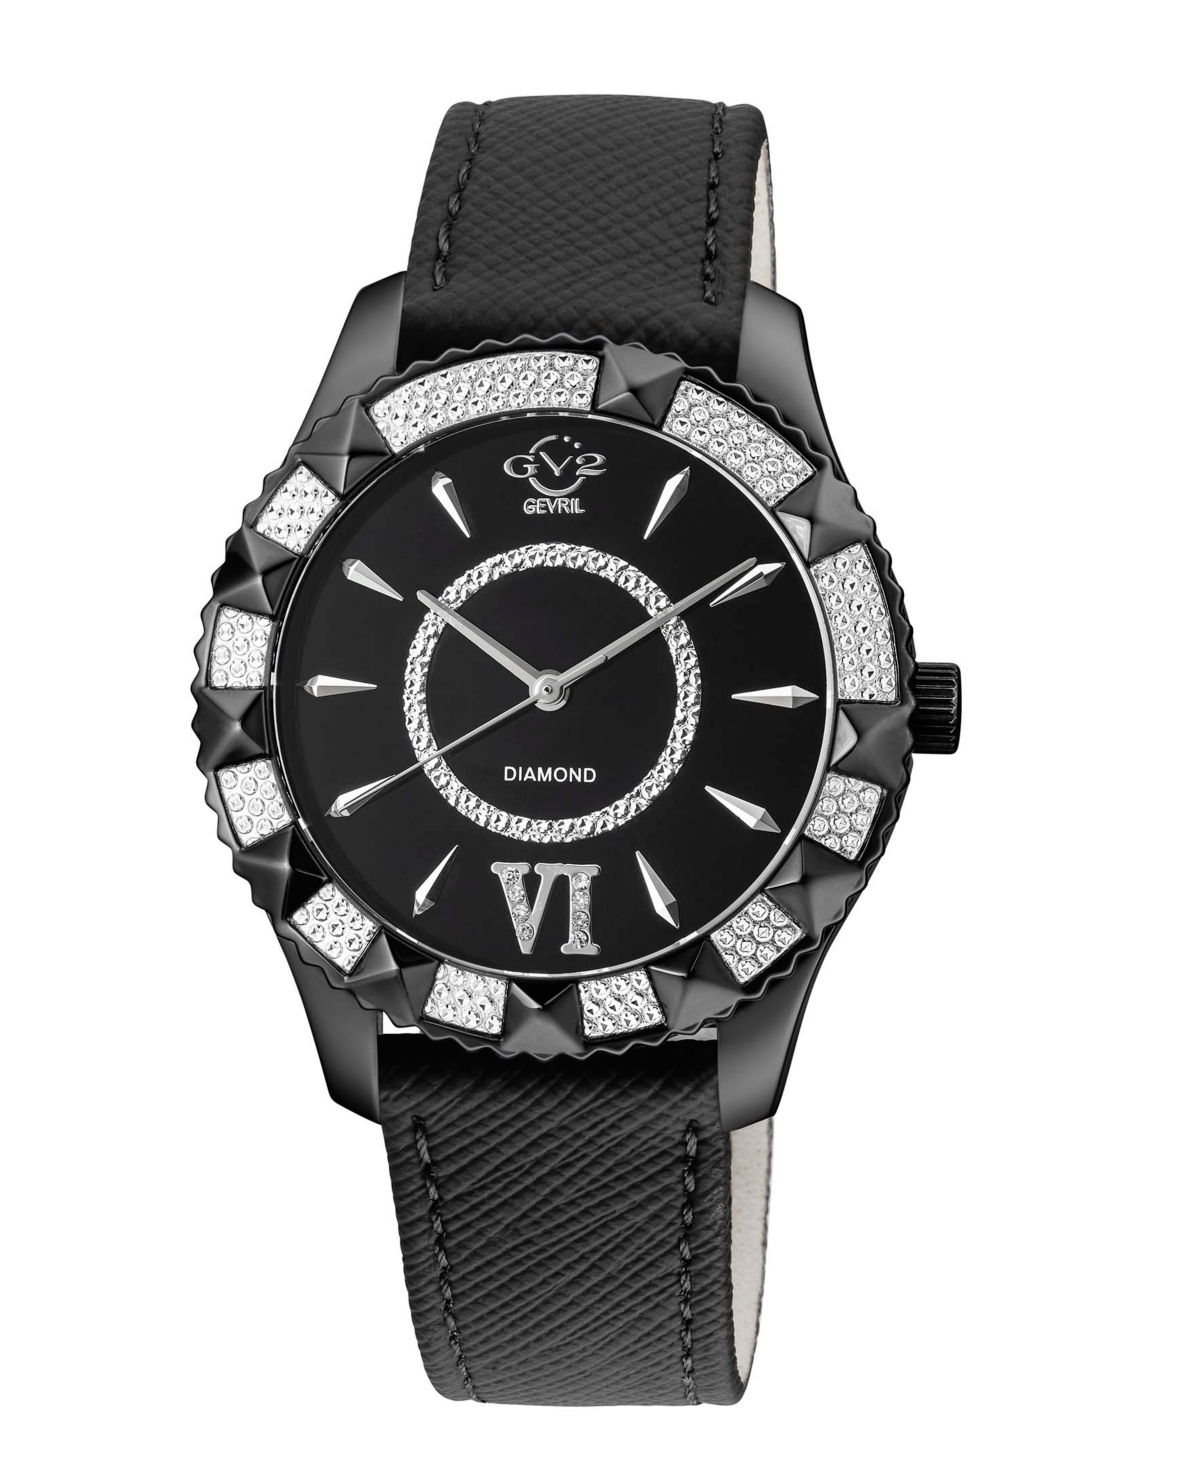 Gv2 By Gevril Women's Venice Swiss Quartz Black Faux Leather Watch 38mm